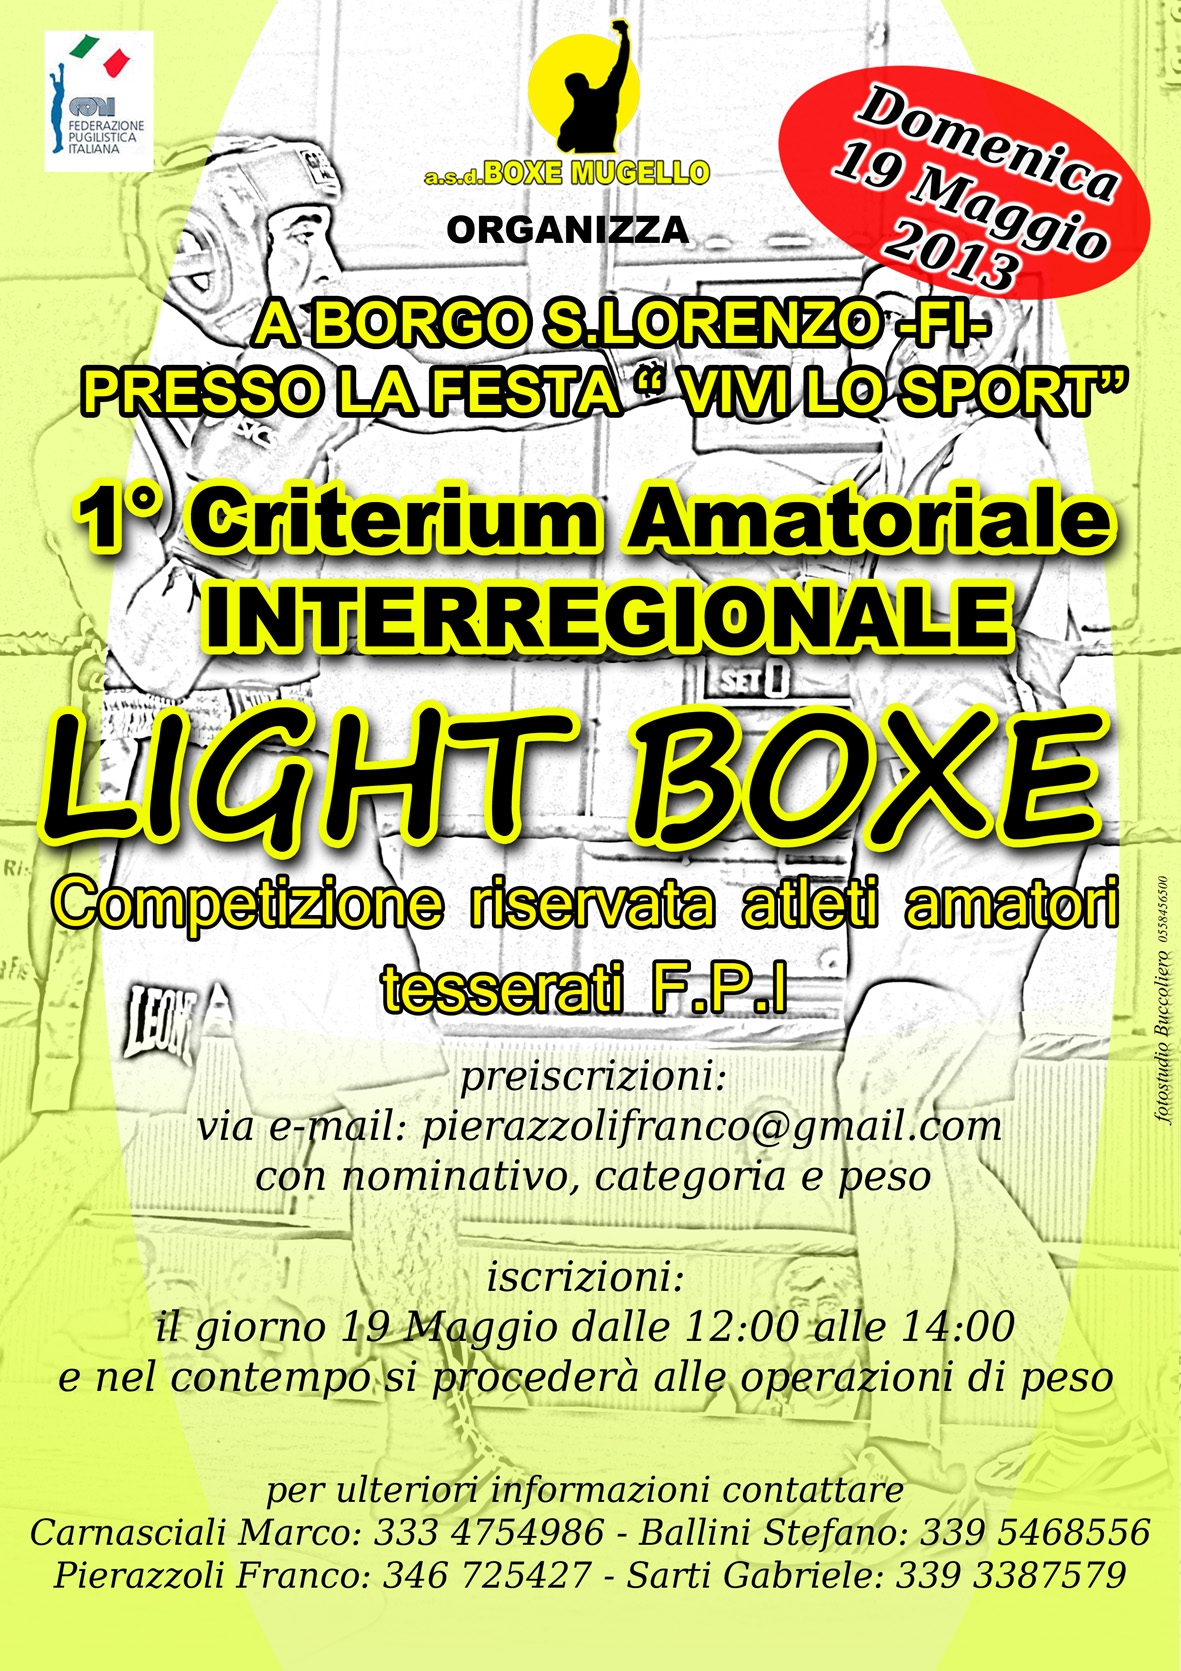 Light Boxe